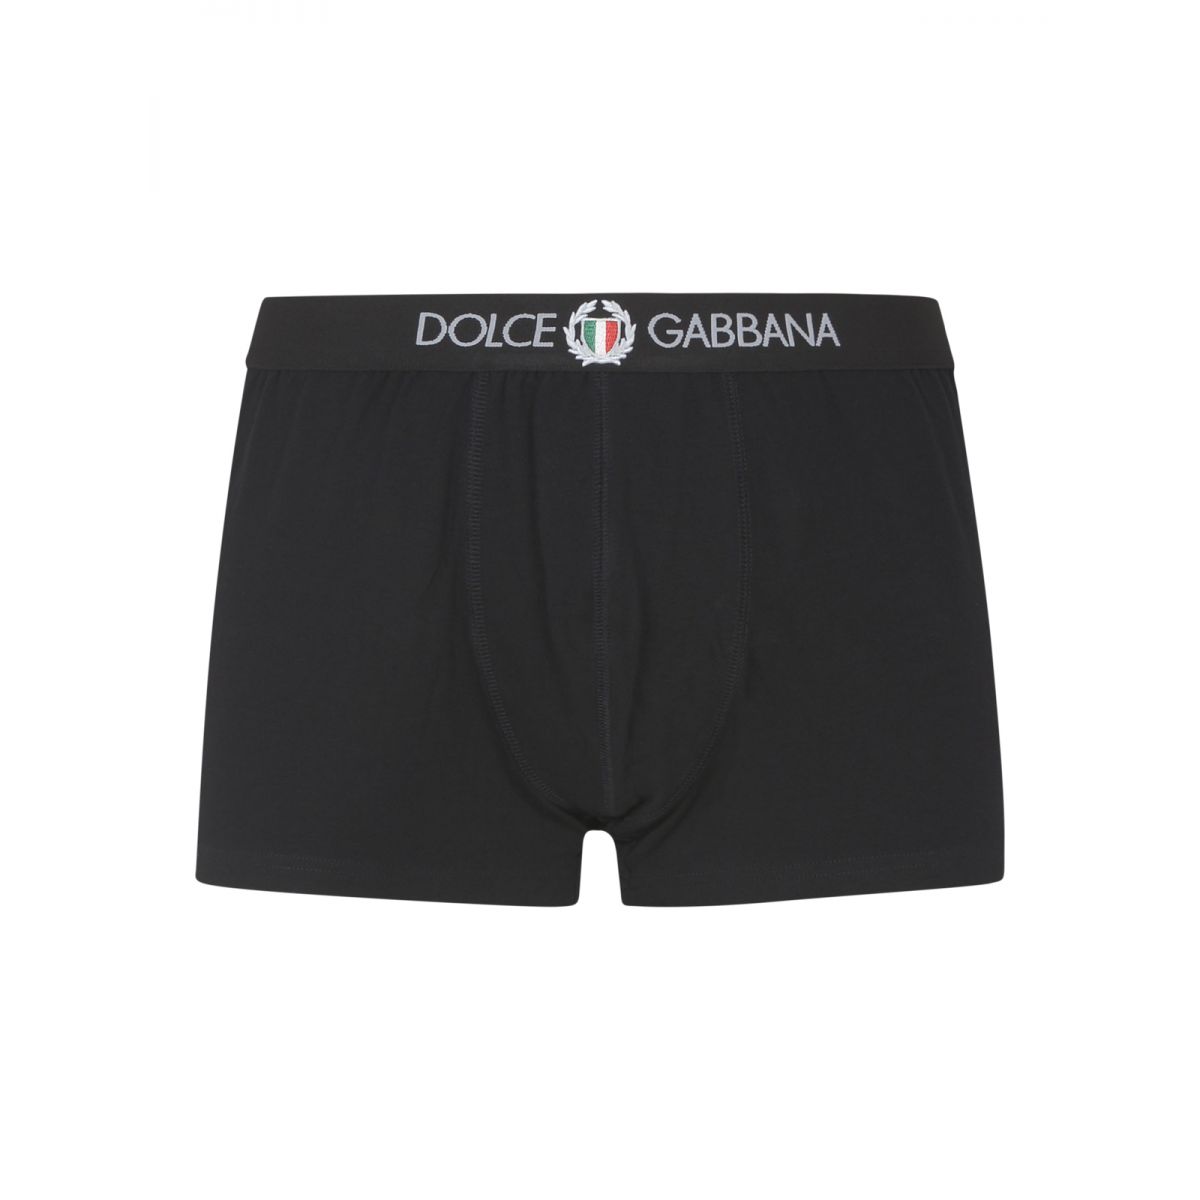 DOLCE & GABBANA - Boxers regular fit de punto elástico bidireccional con logo